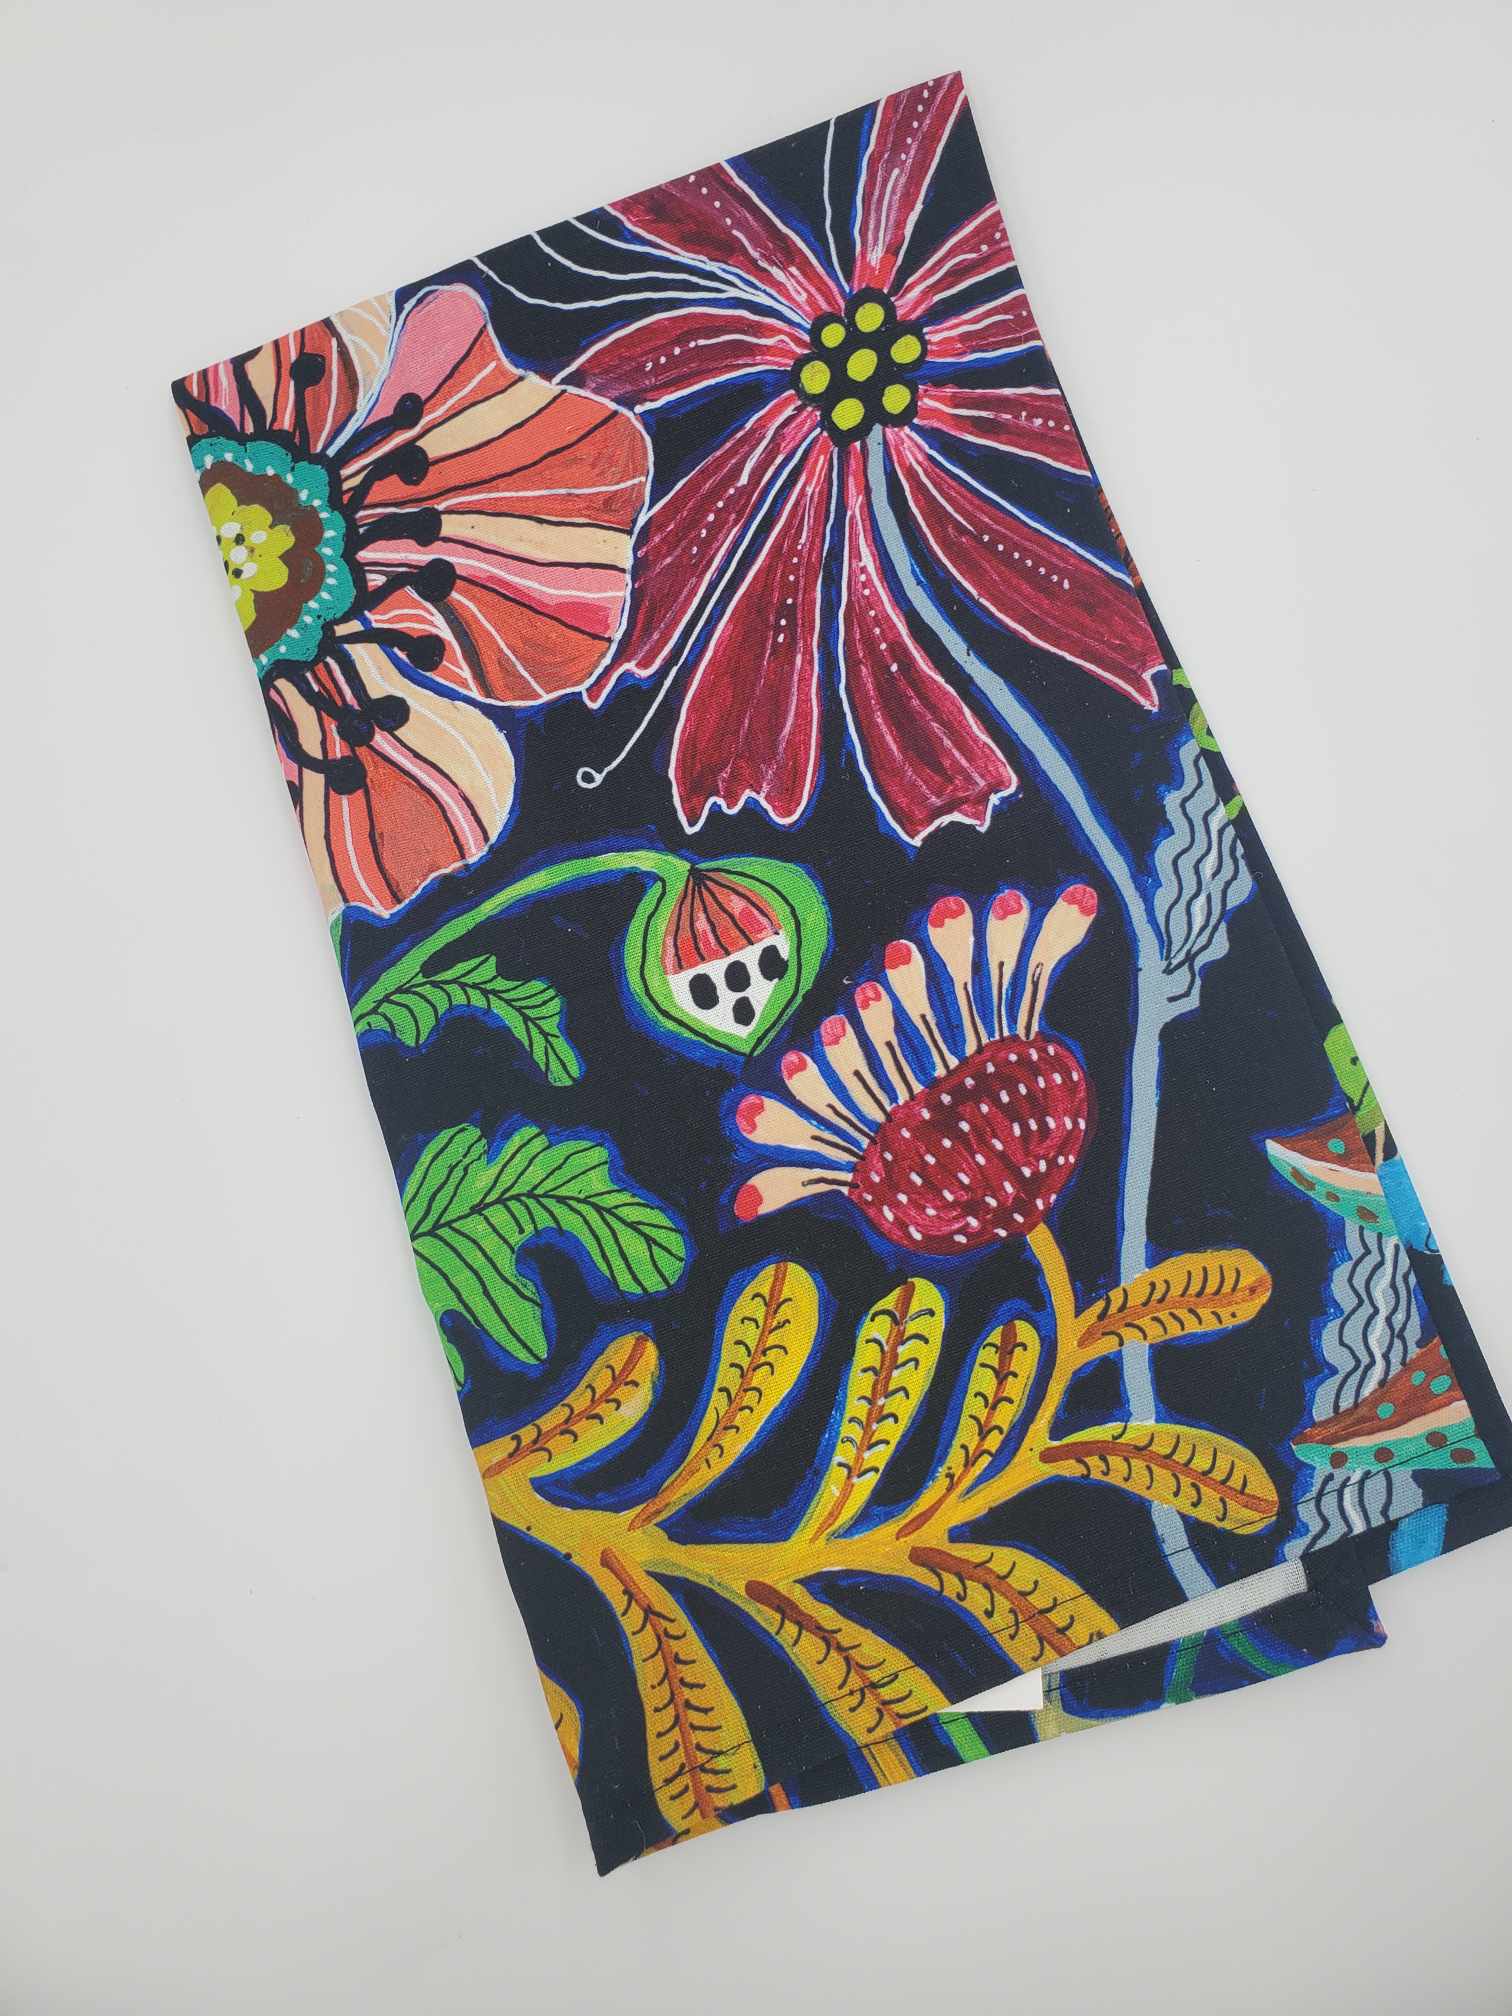 Folded Lori Siebert tea towel with vibrant colors on a black  back drop. 